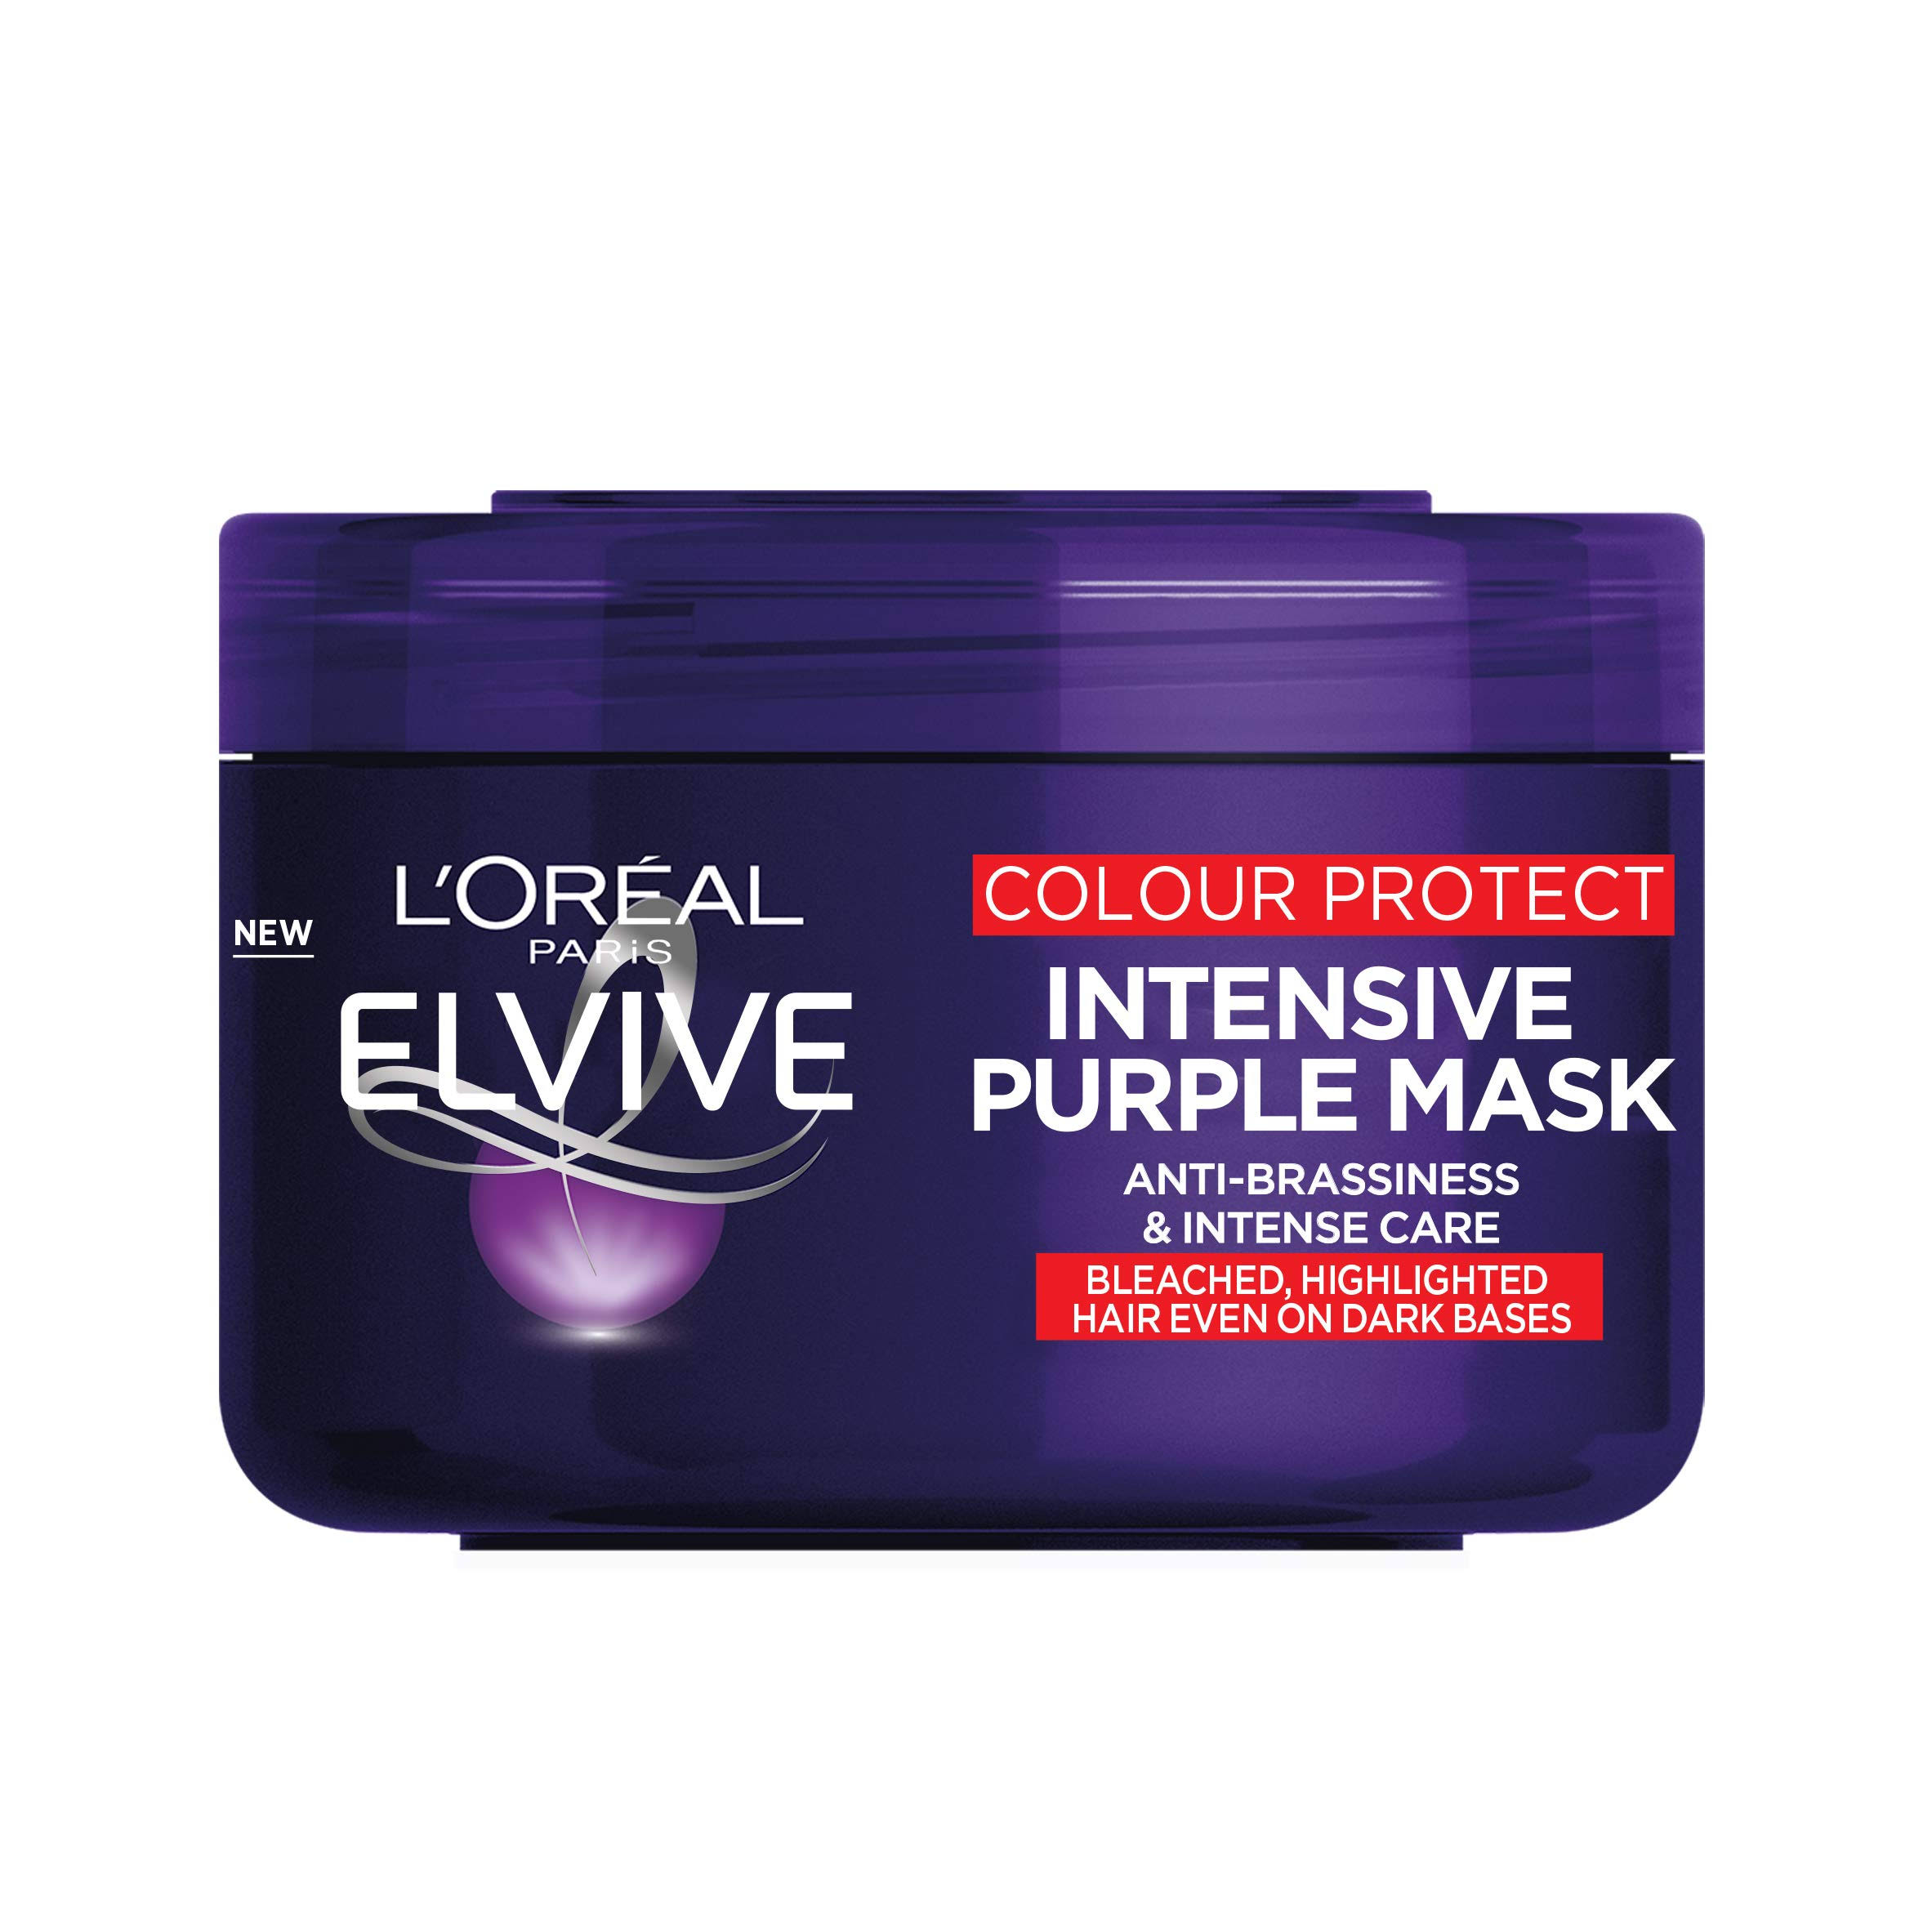 L'Oreal Paris Elvive Colour Protect Anti Brassiness Purple Mask,250 ml